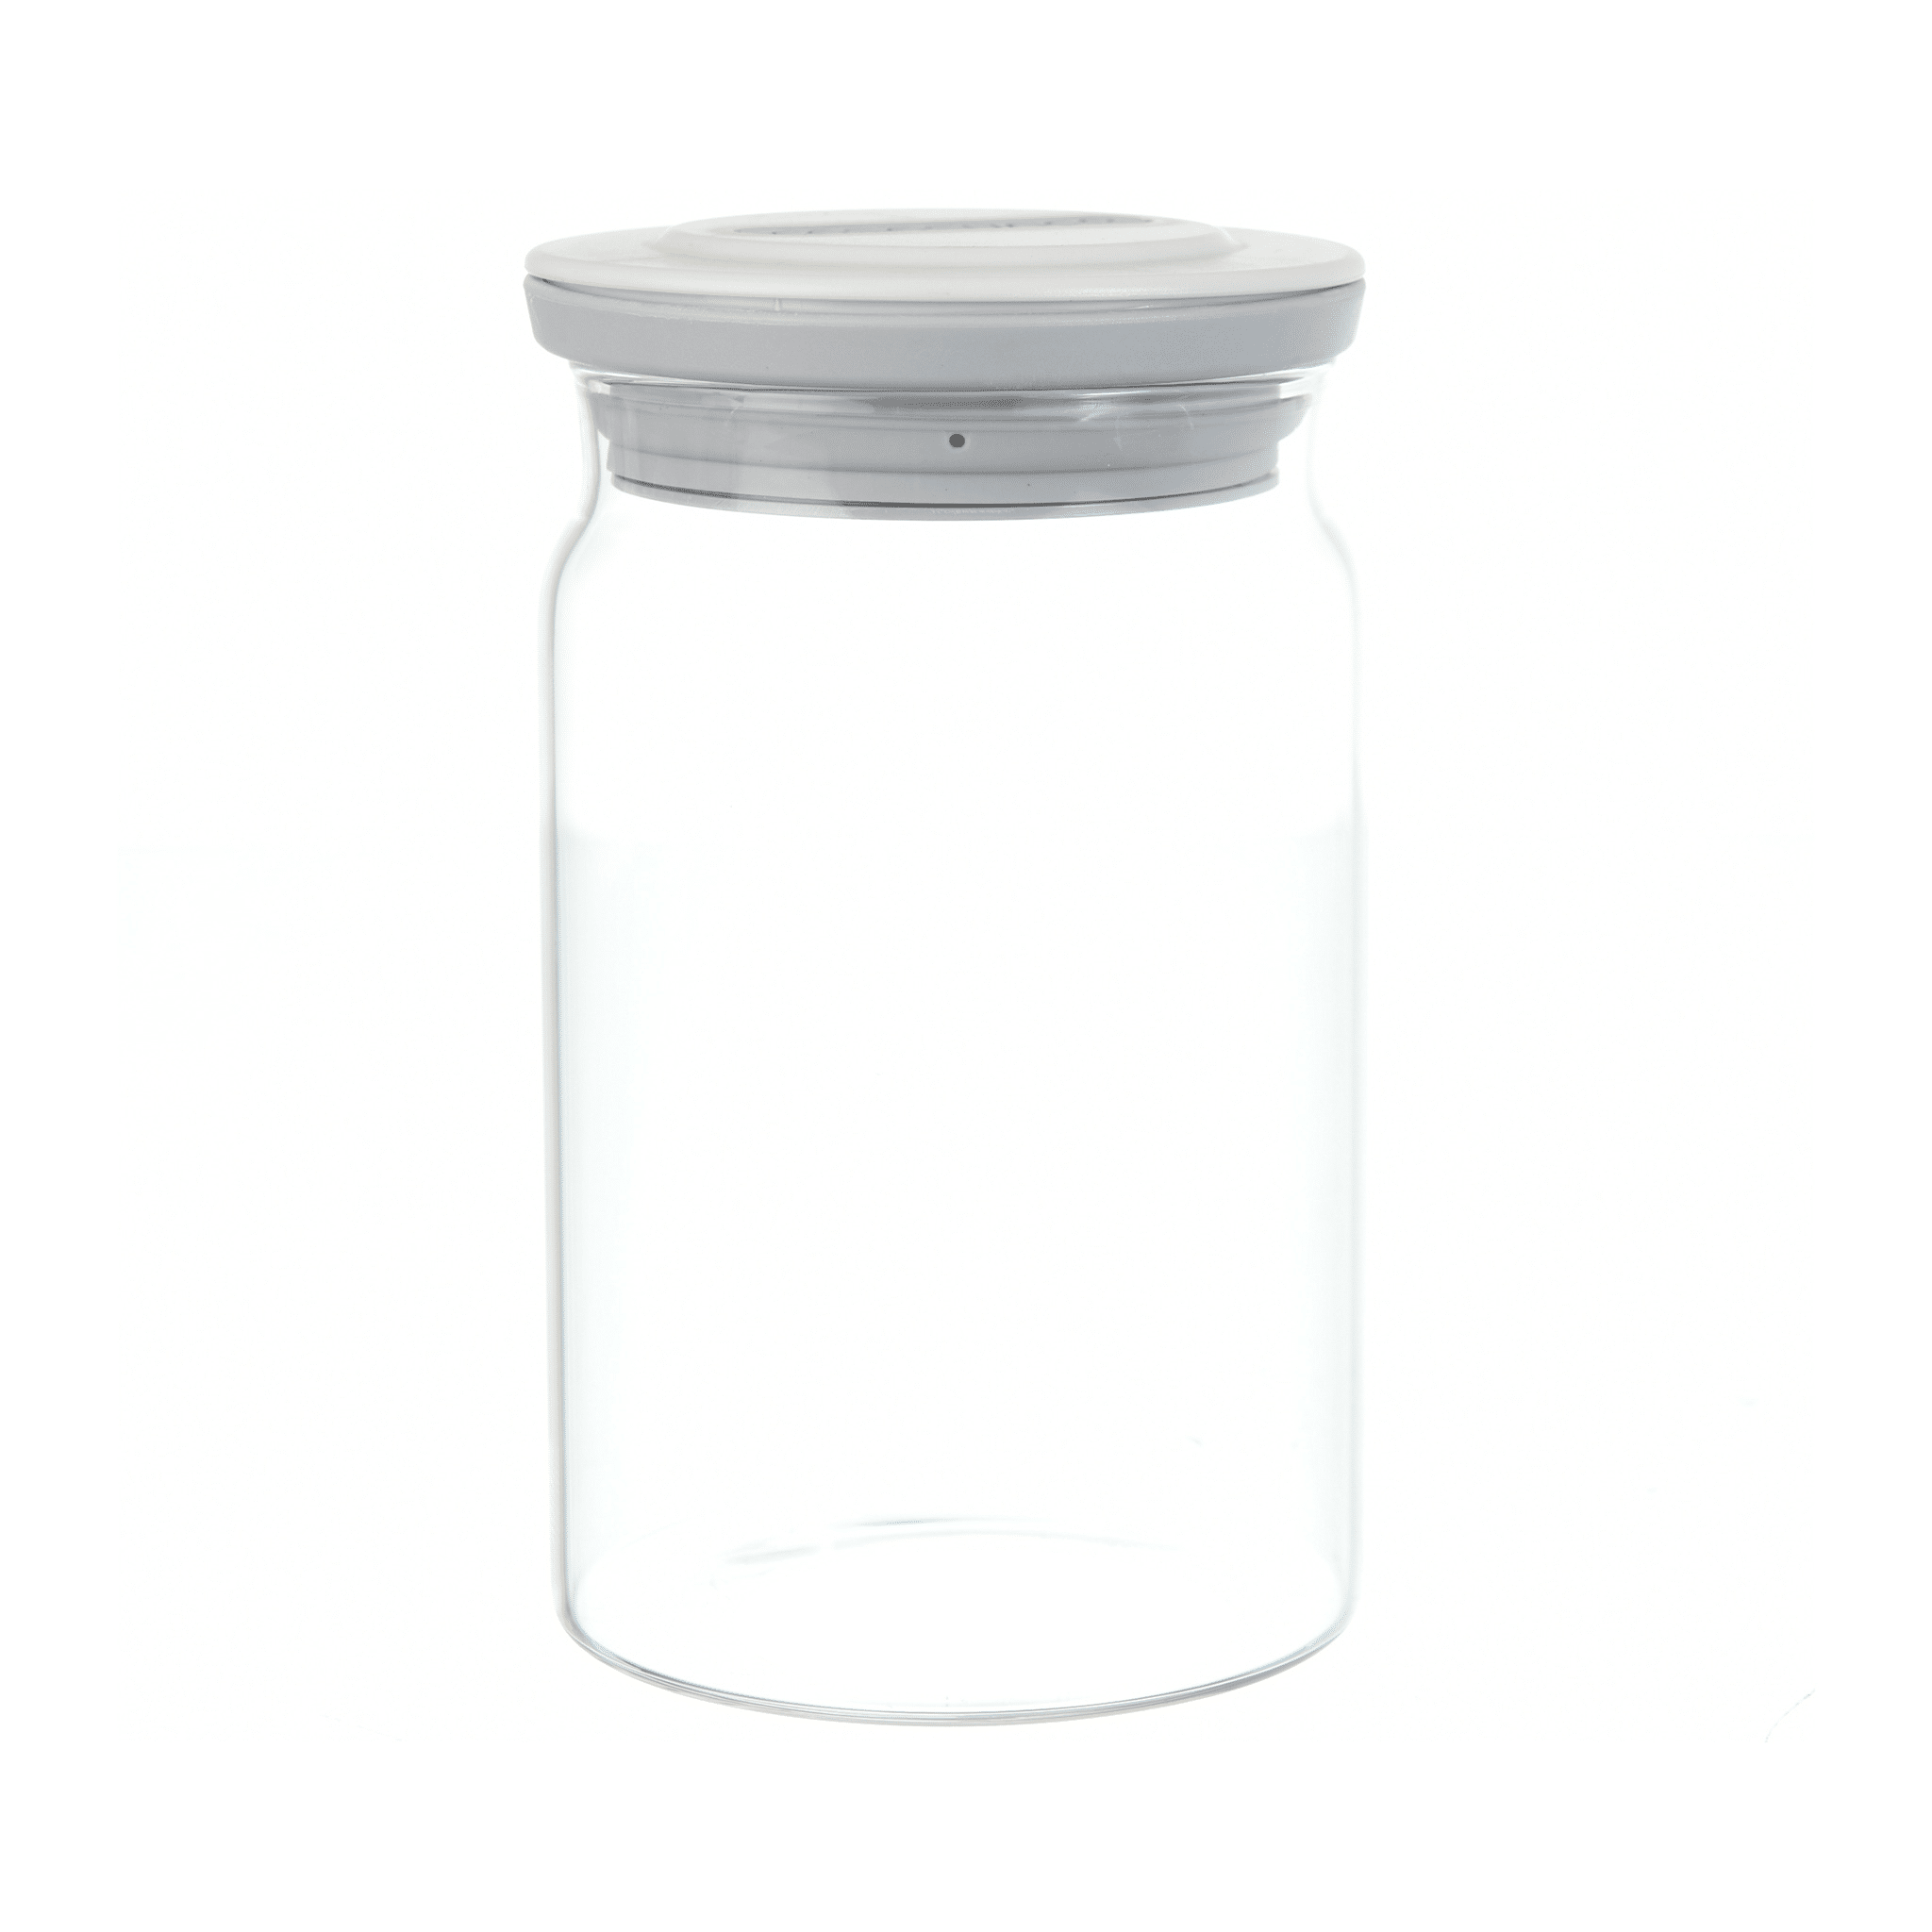 CasaSunco - Glass Jar with Silicone Cover - Grey - 15.5x9.5cm - 520008112